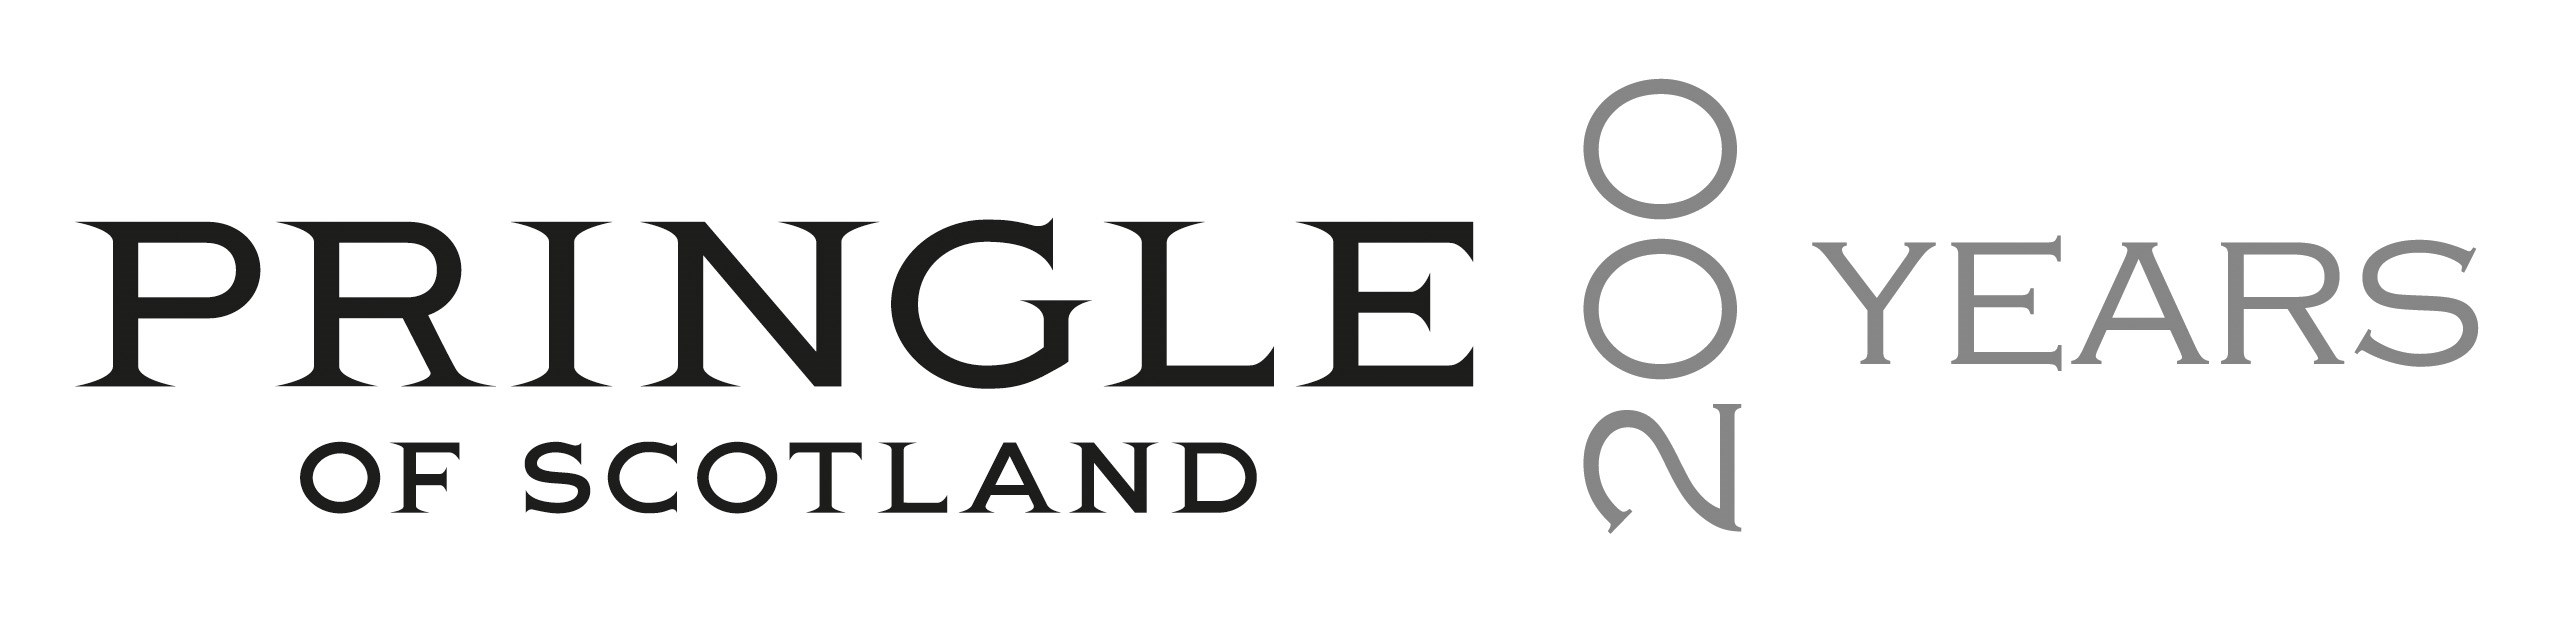 Pringle of Scotland 200 Years logo